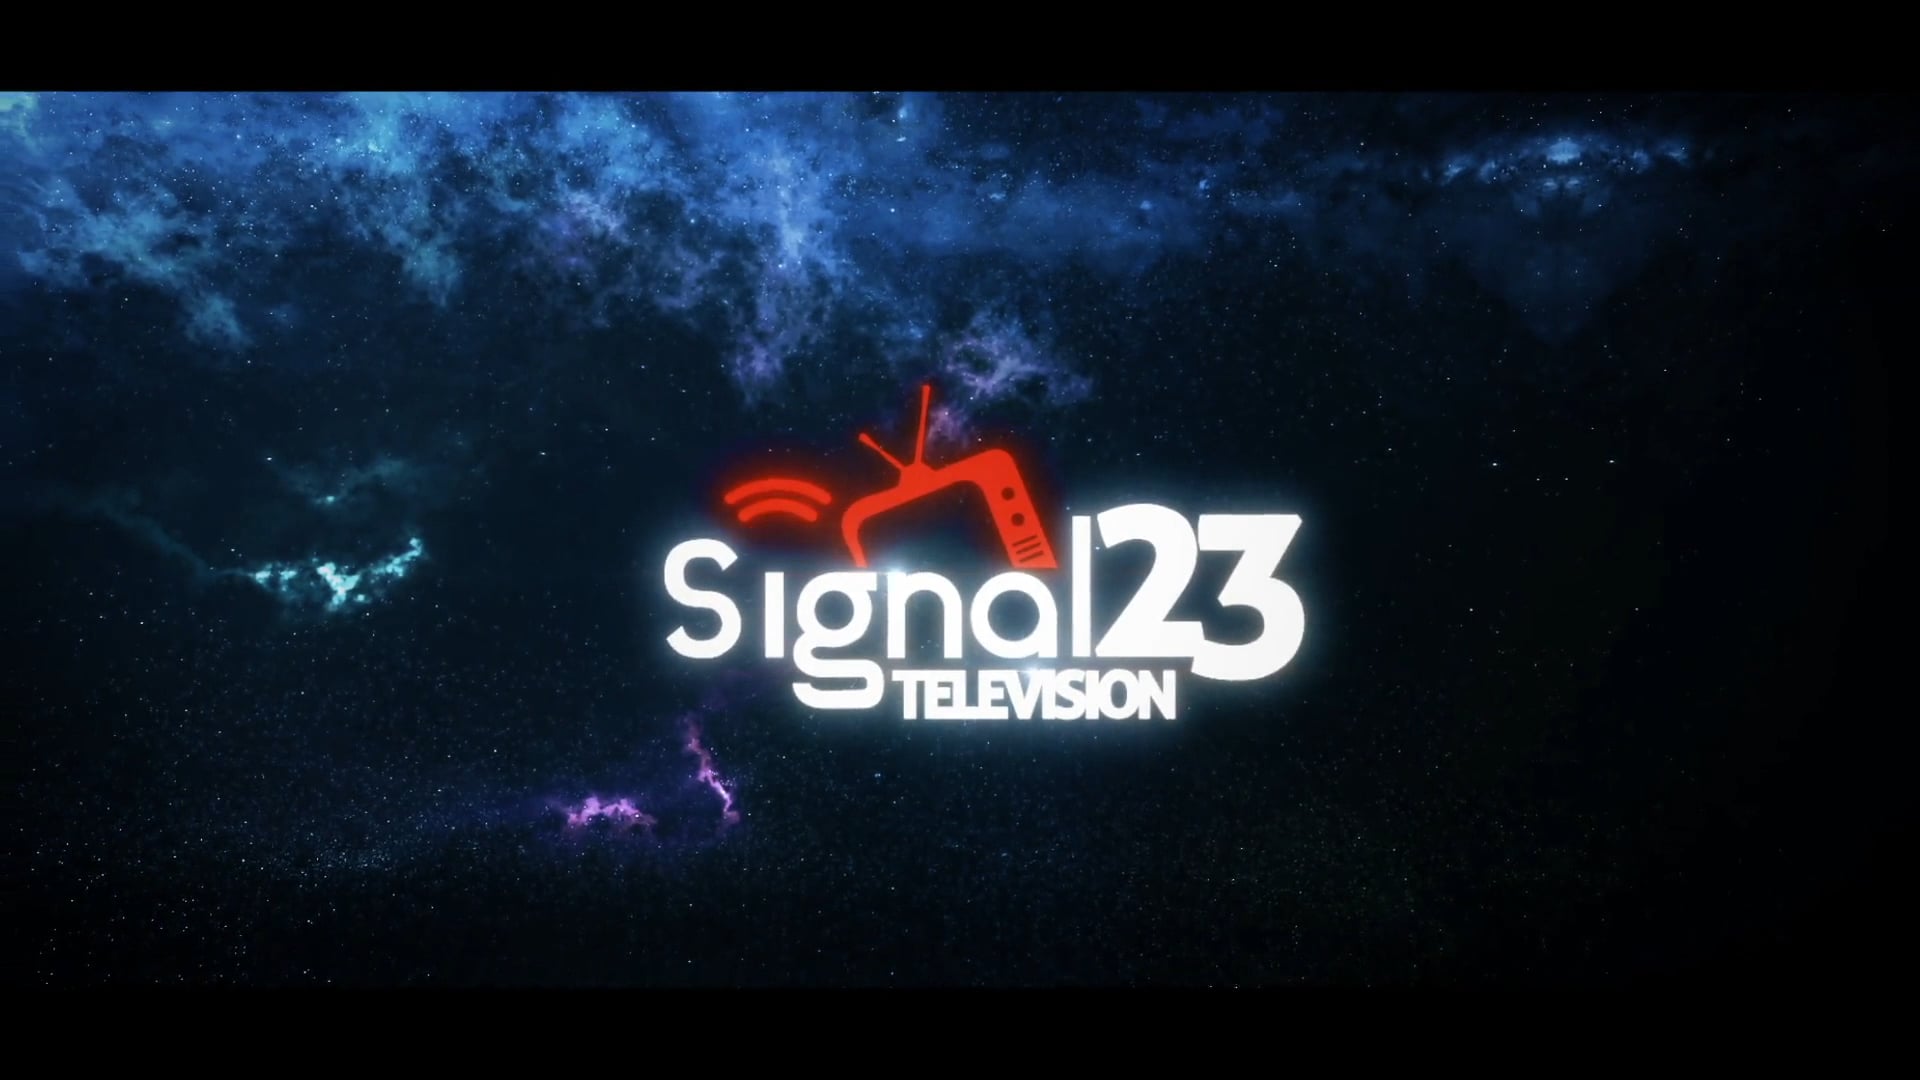 signal 23 tv shows